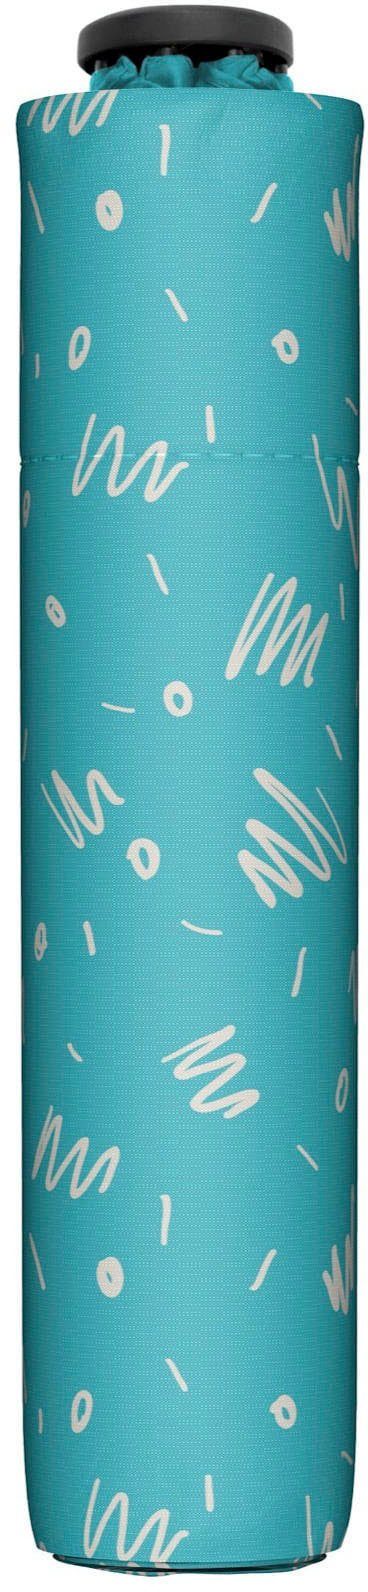 Taschenregenschirm doppler® blue aqua Minimally, zero,99